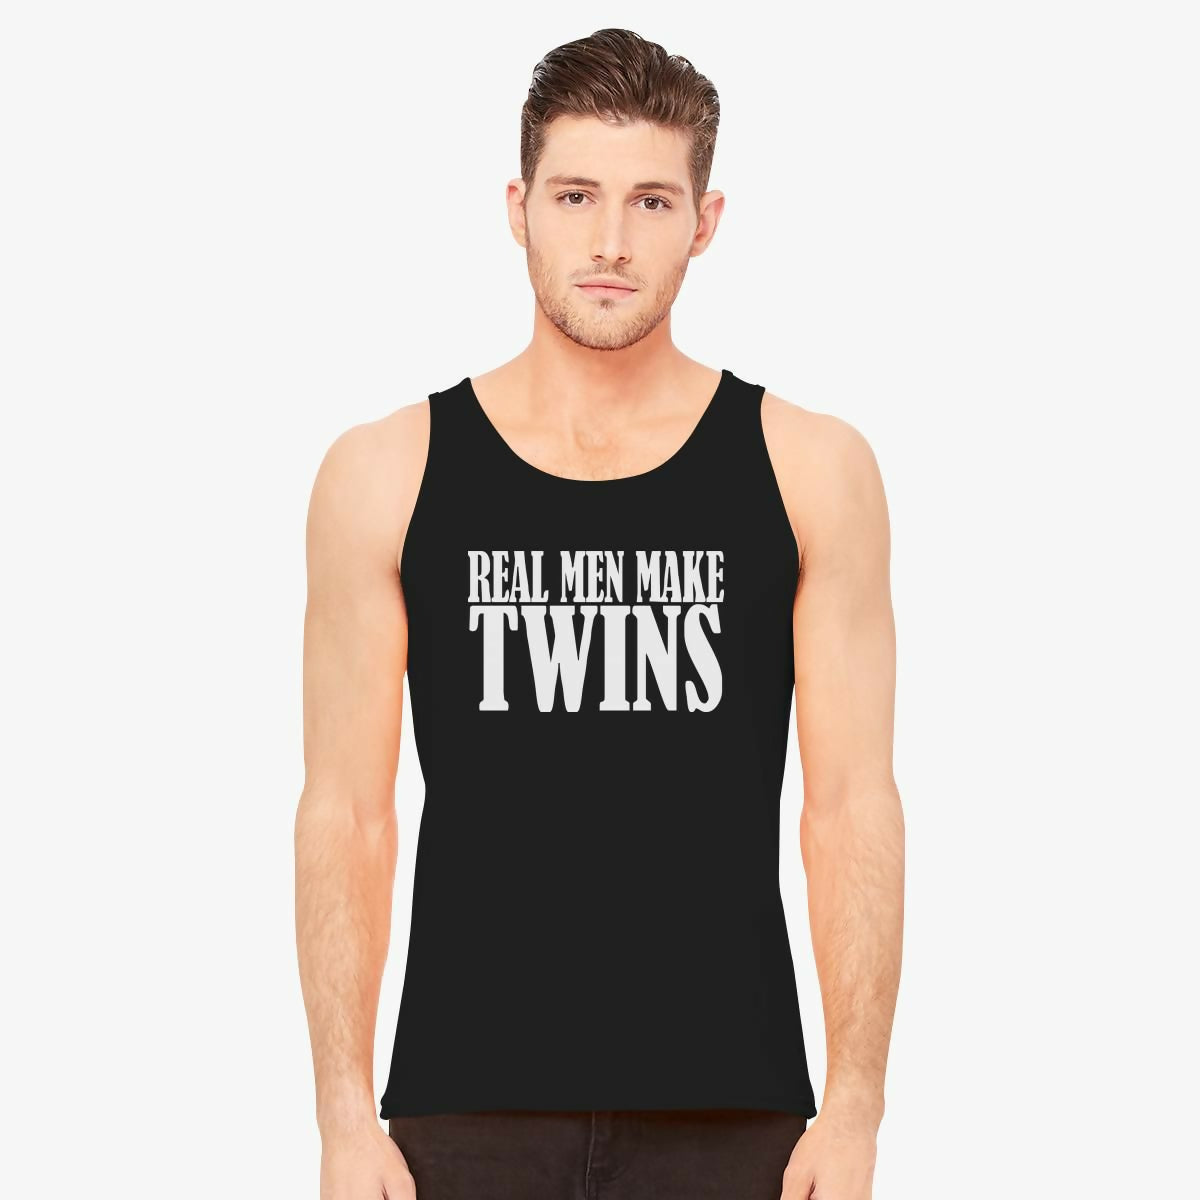 Real Men Make Twins funny printed sando tank top for men - ValueBox